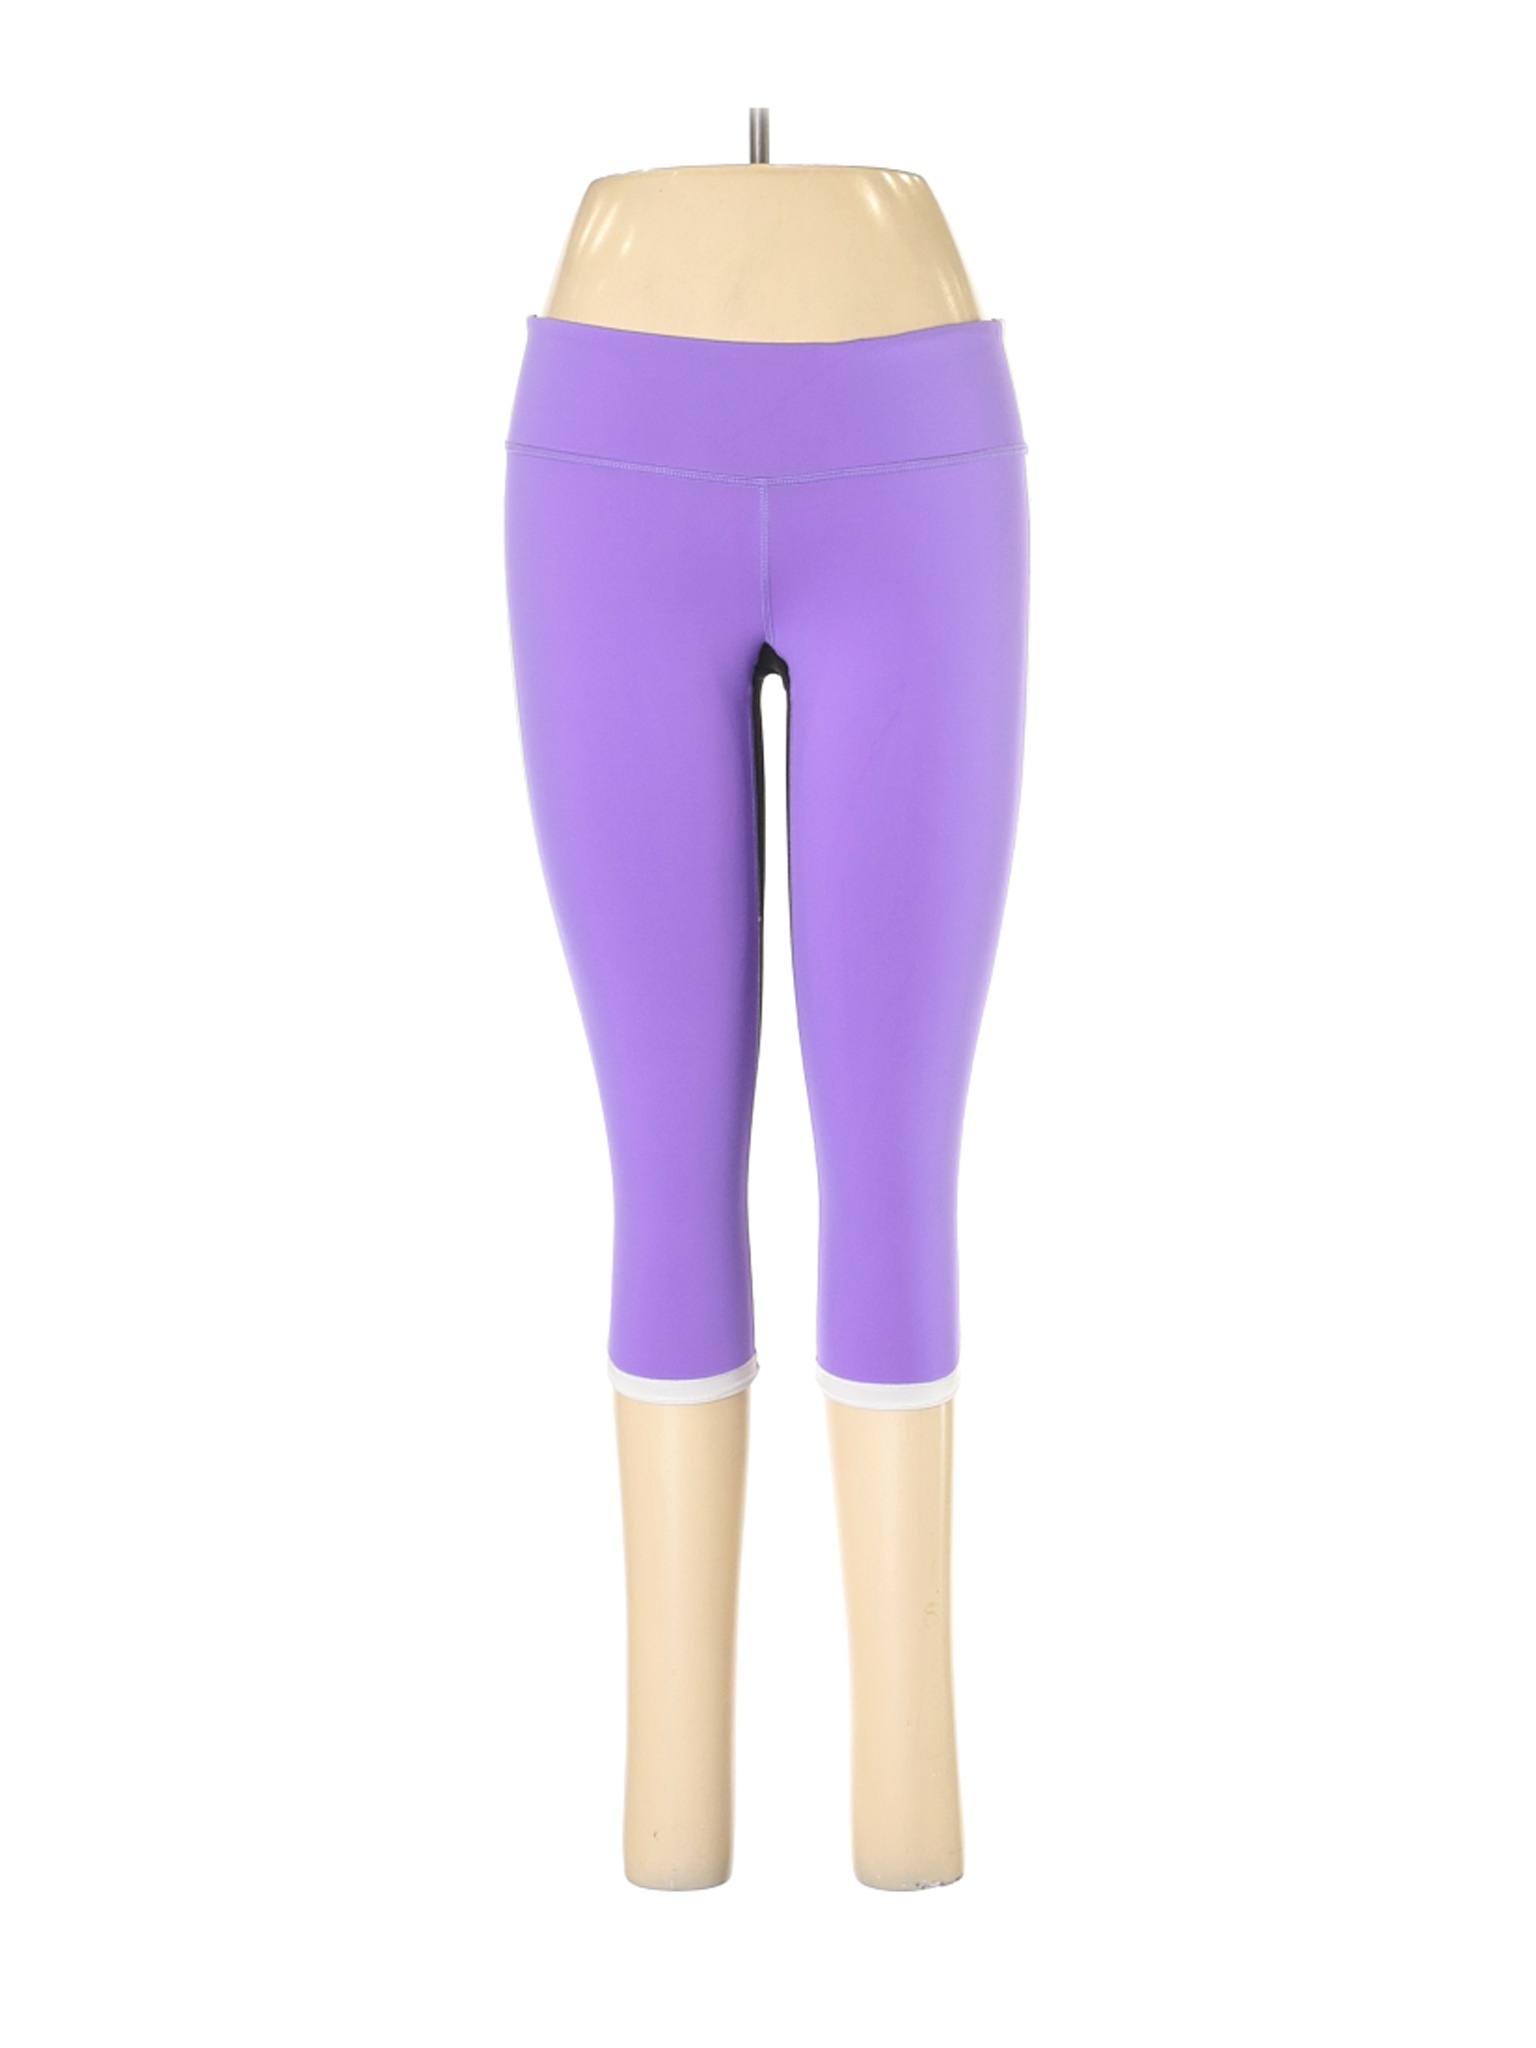 Lululemon Athletica Women Purple Active Pants 6 | eBay